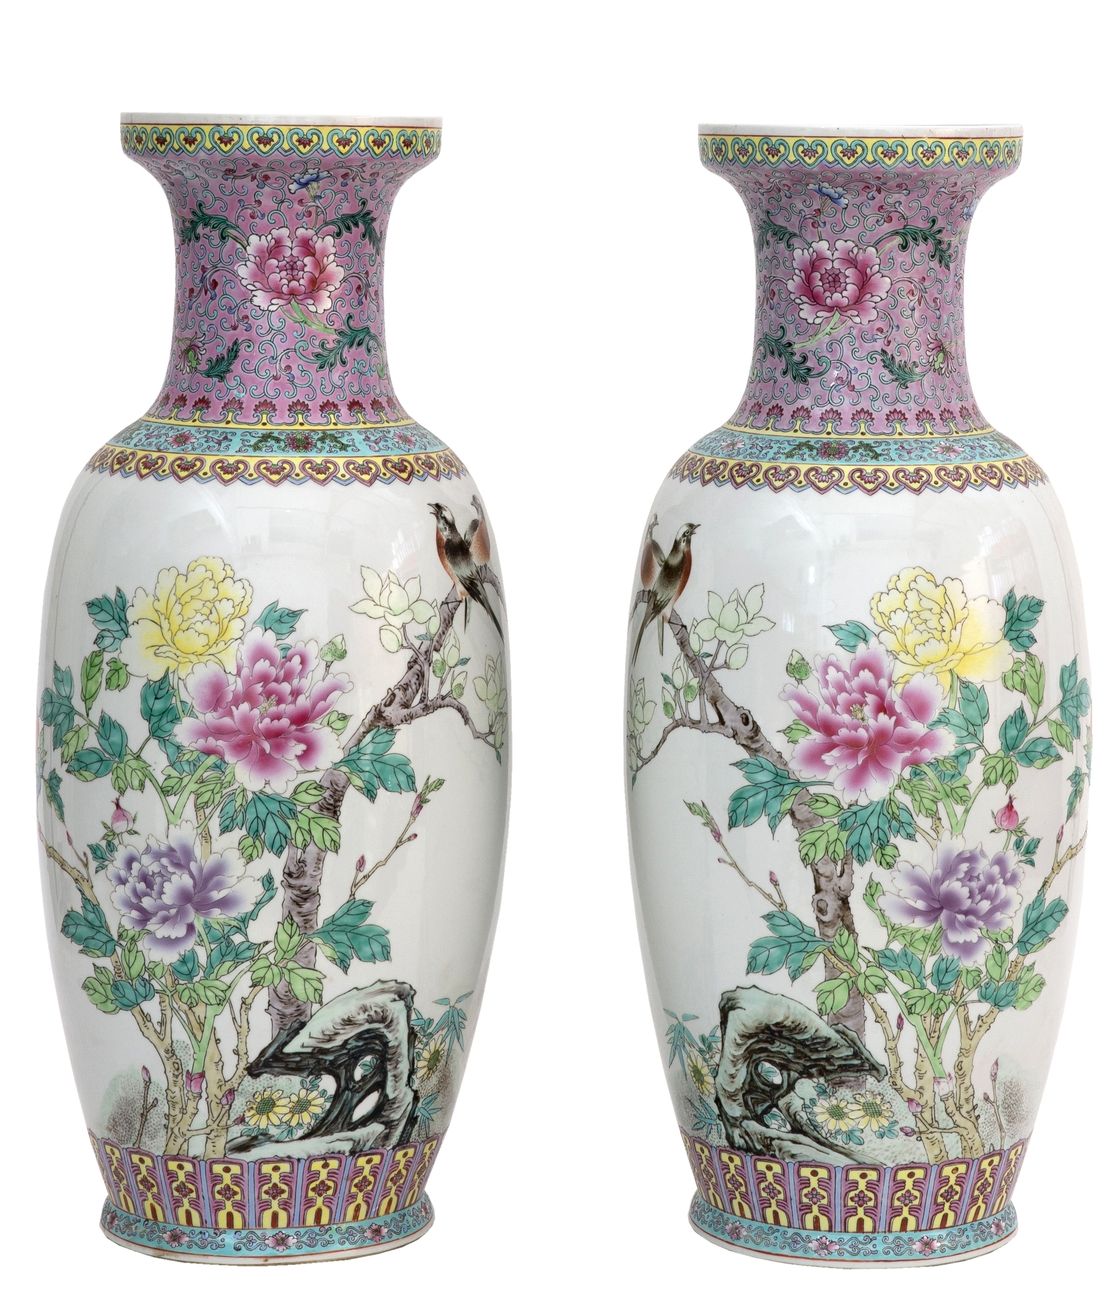 Null 中国，20世纪
一对用法米勒珐琅彩装饰的瓷瓶，上面有枝头鸟和一首诗。
乾隆年款，有六个天启的字样。
高度：60厘米